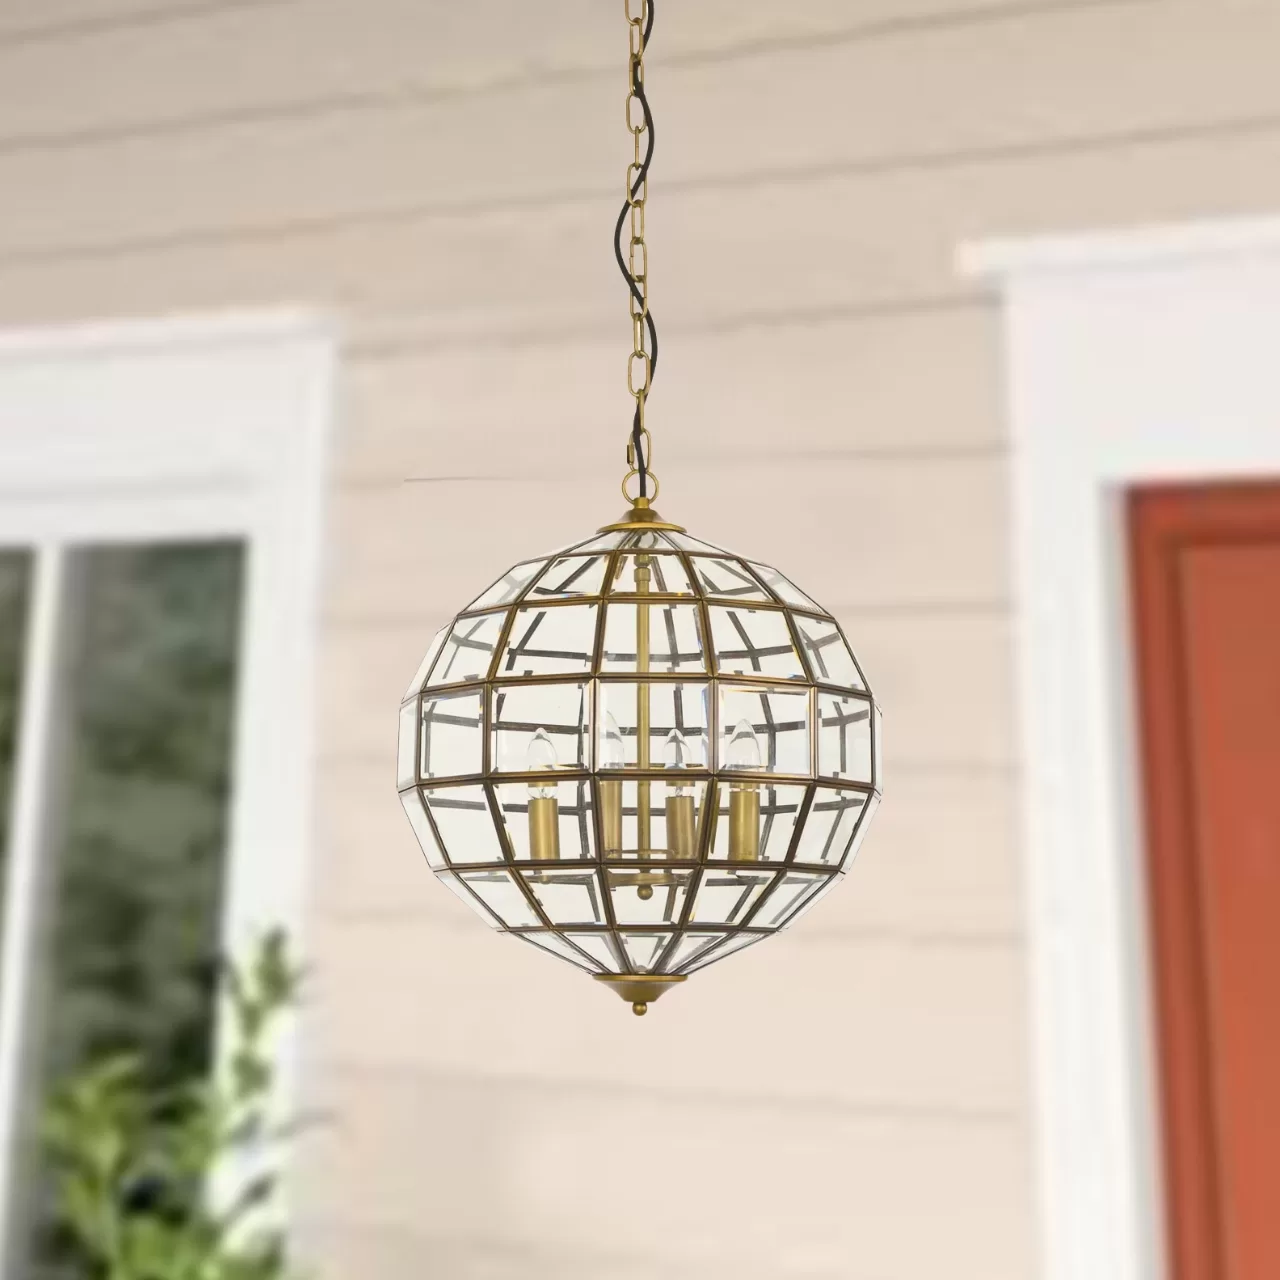 Outdoor Copper Hanging Light E14 Bulb